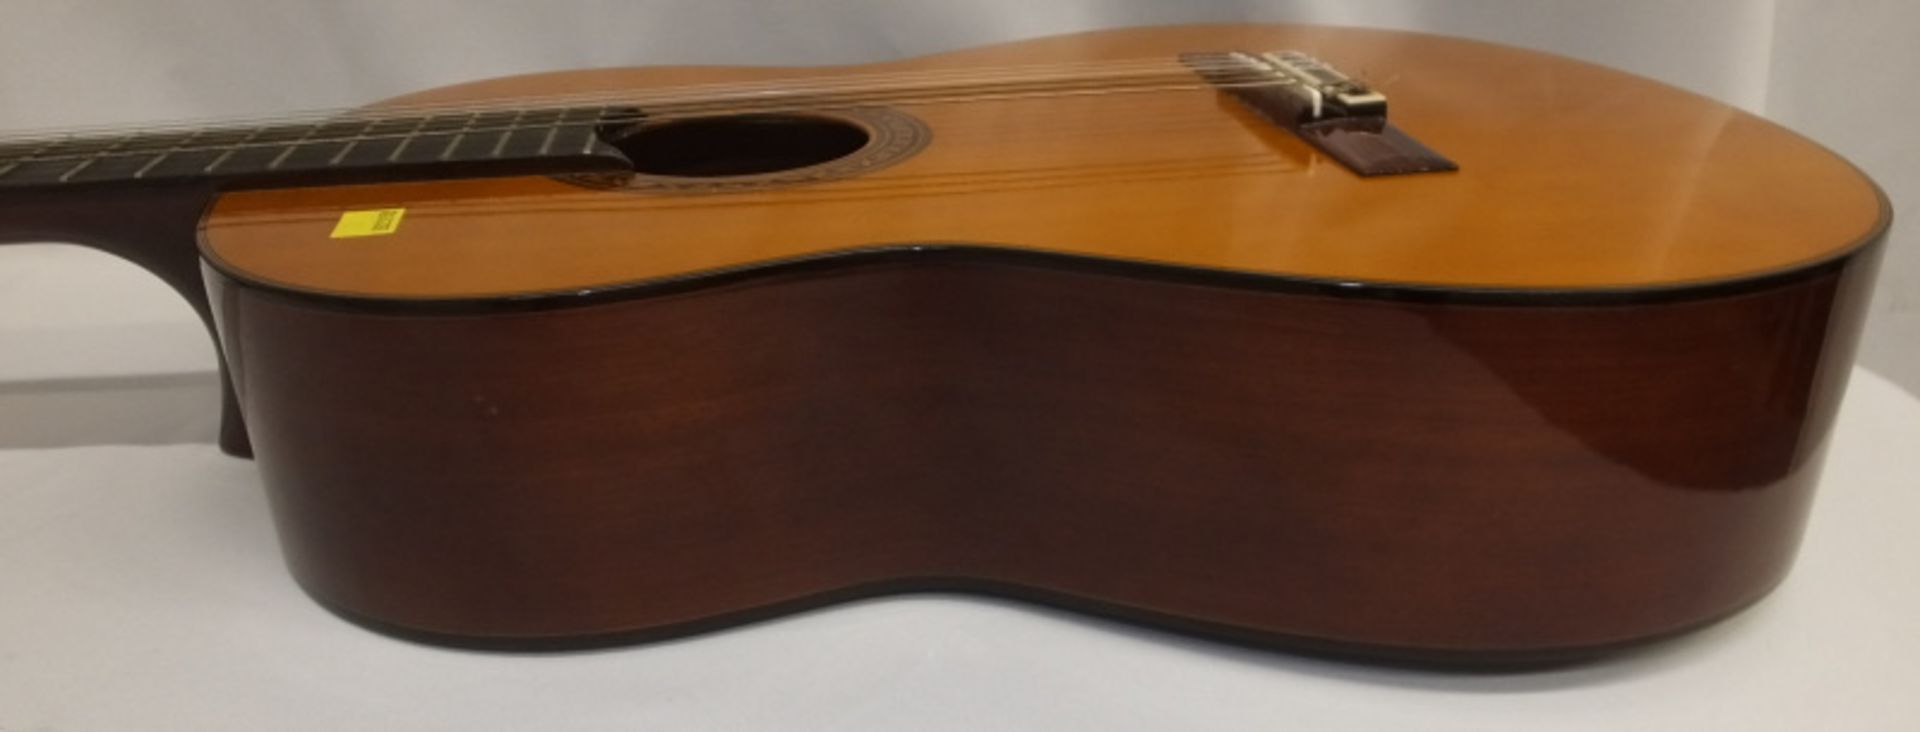 Yamaha CG-120A Acoustic Guitar - Image 5 of 10